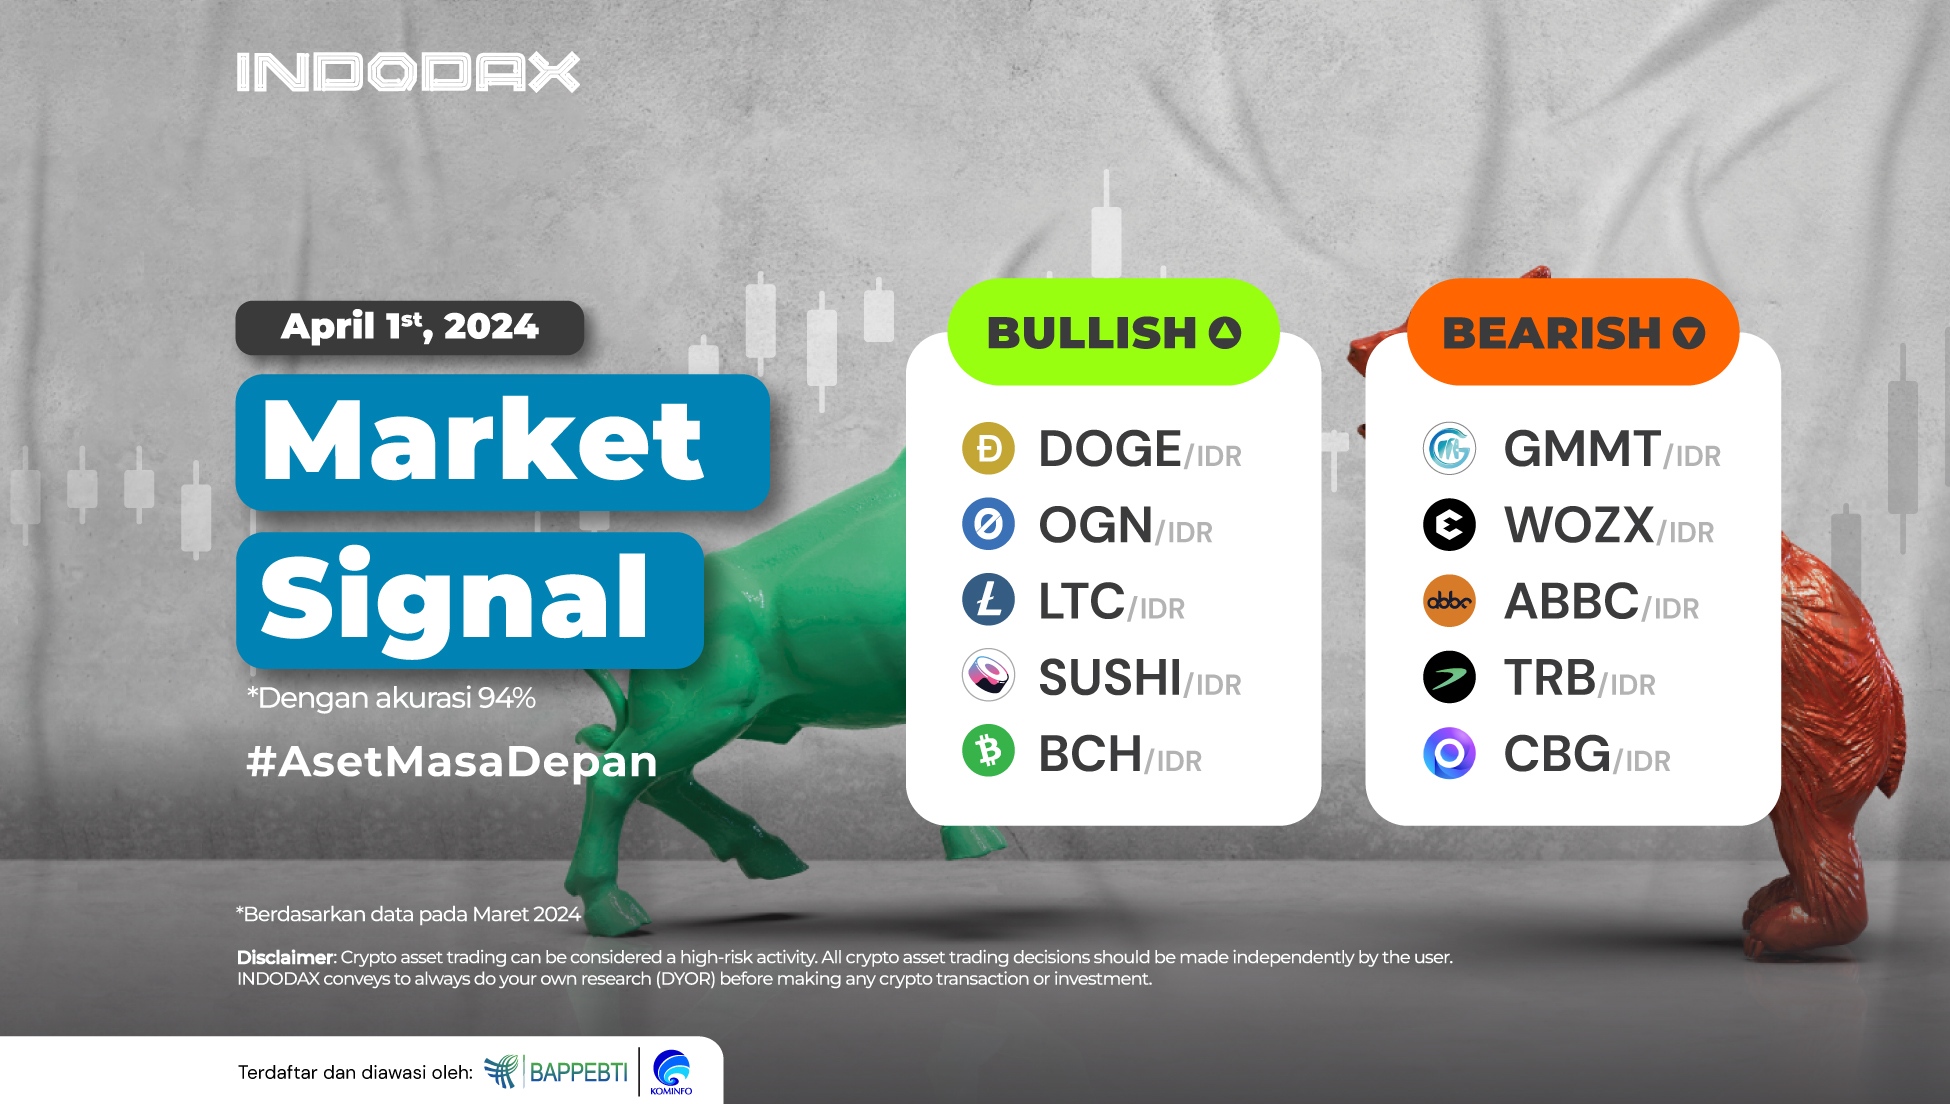 Dogecoin Rules Bullish Crypto Market in April, According to INDODAX Market Signal